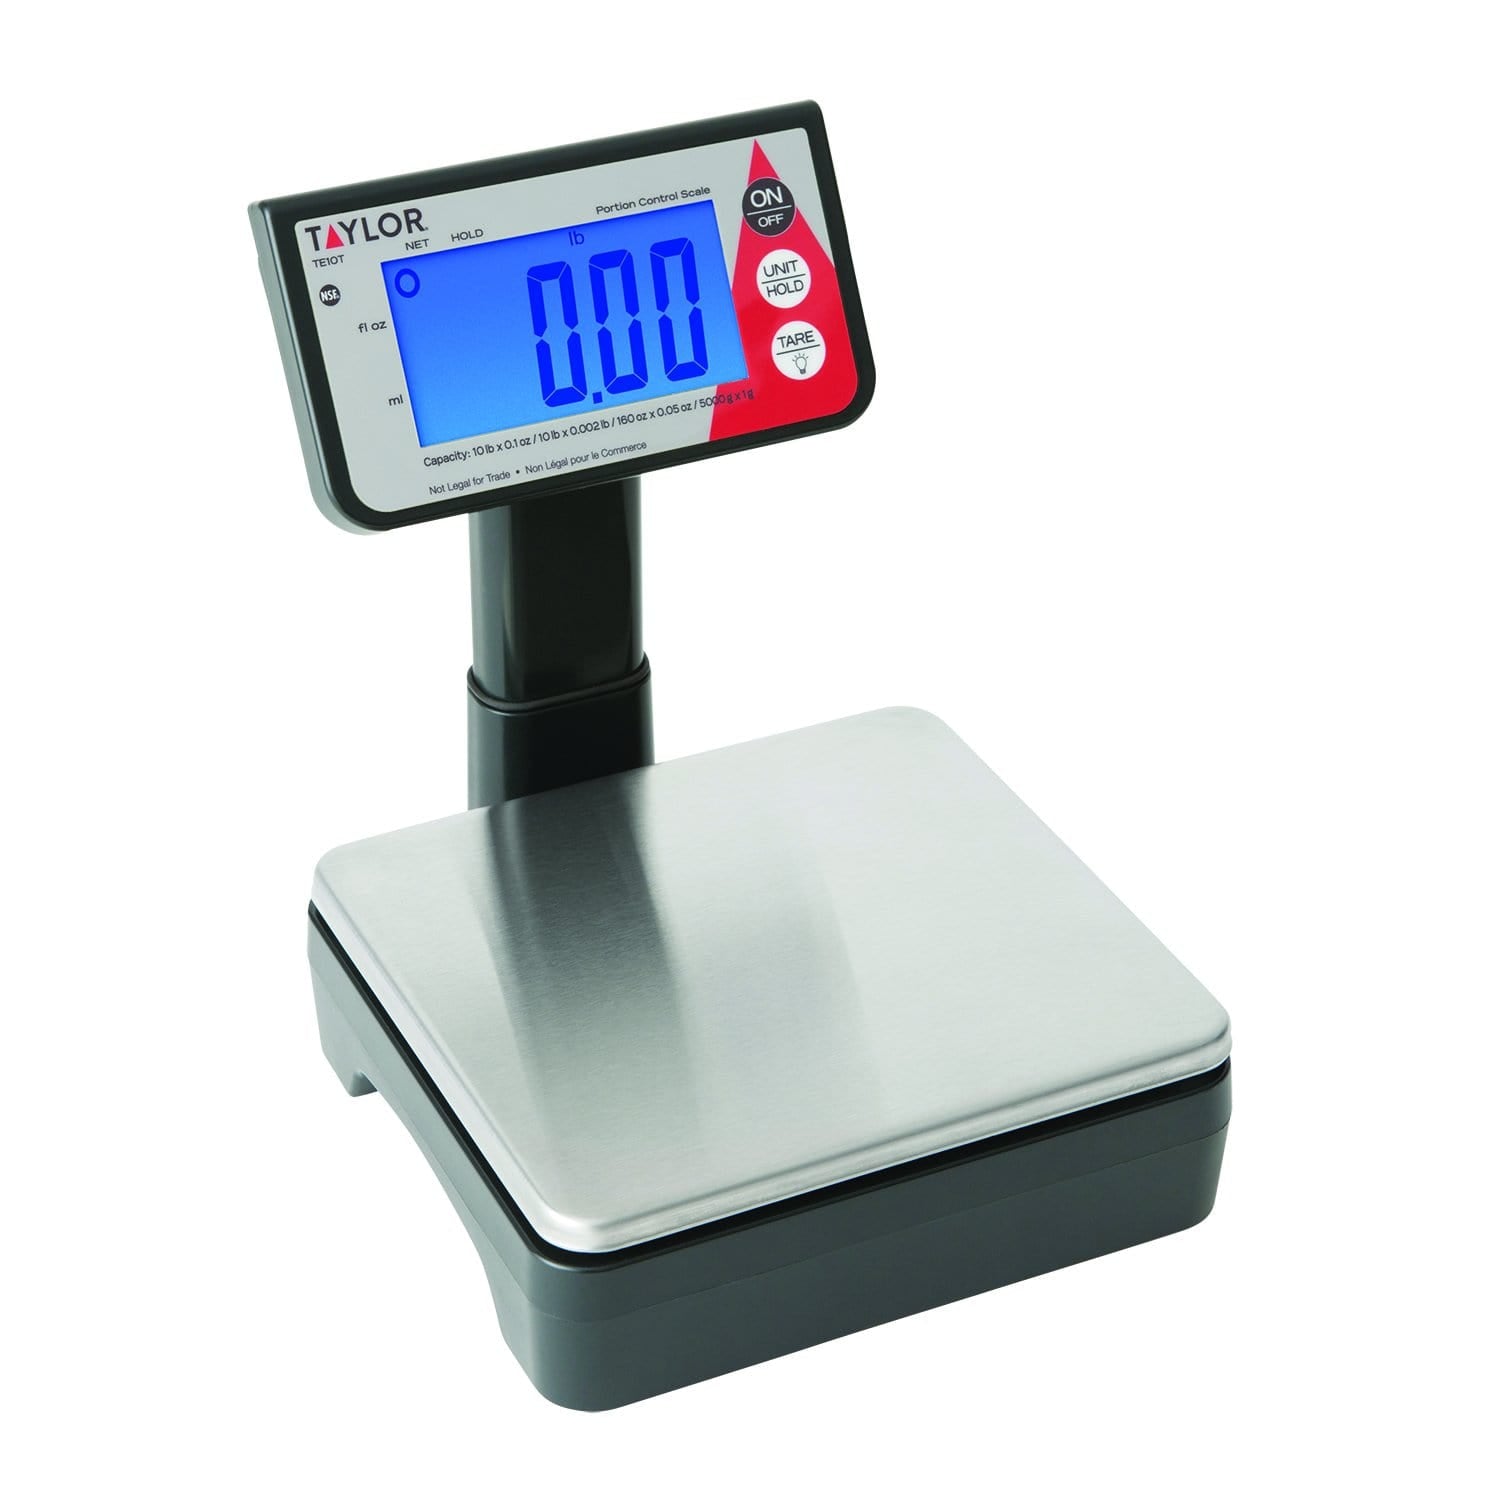 Taylor (TE11FT) 11 lb. Digital Portion Control Scale